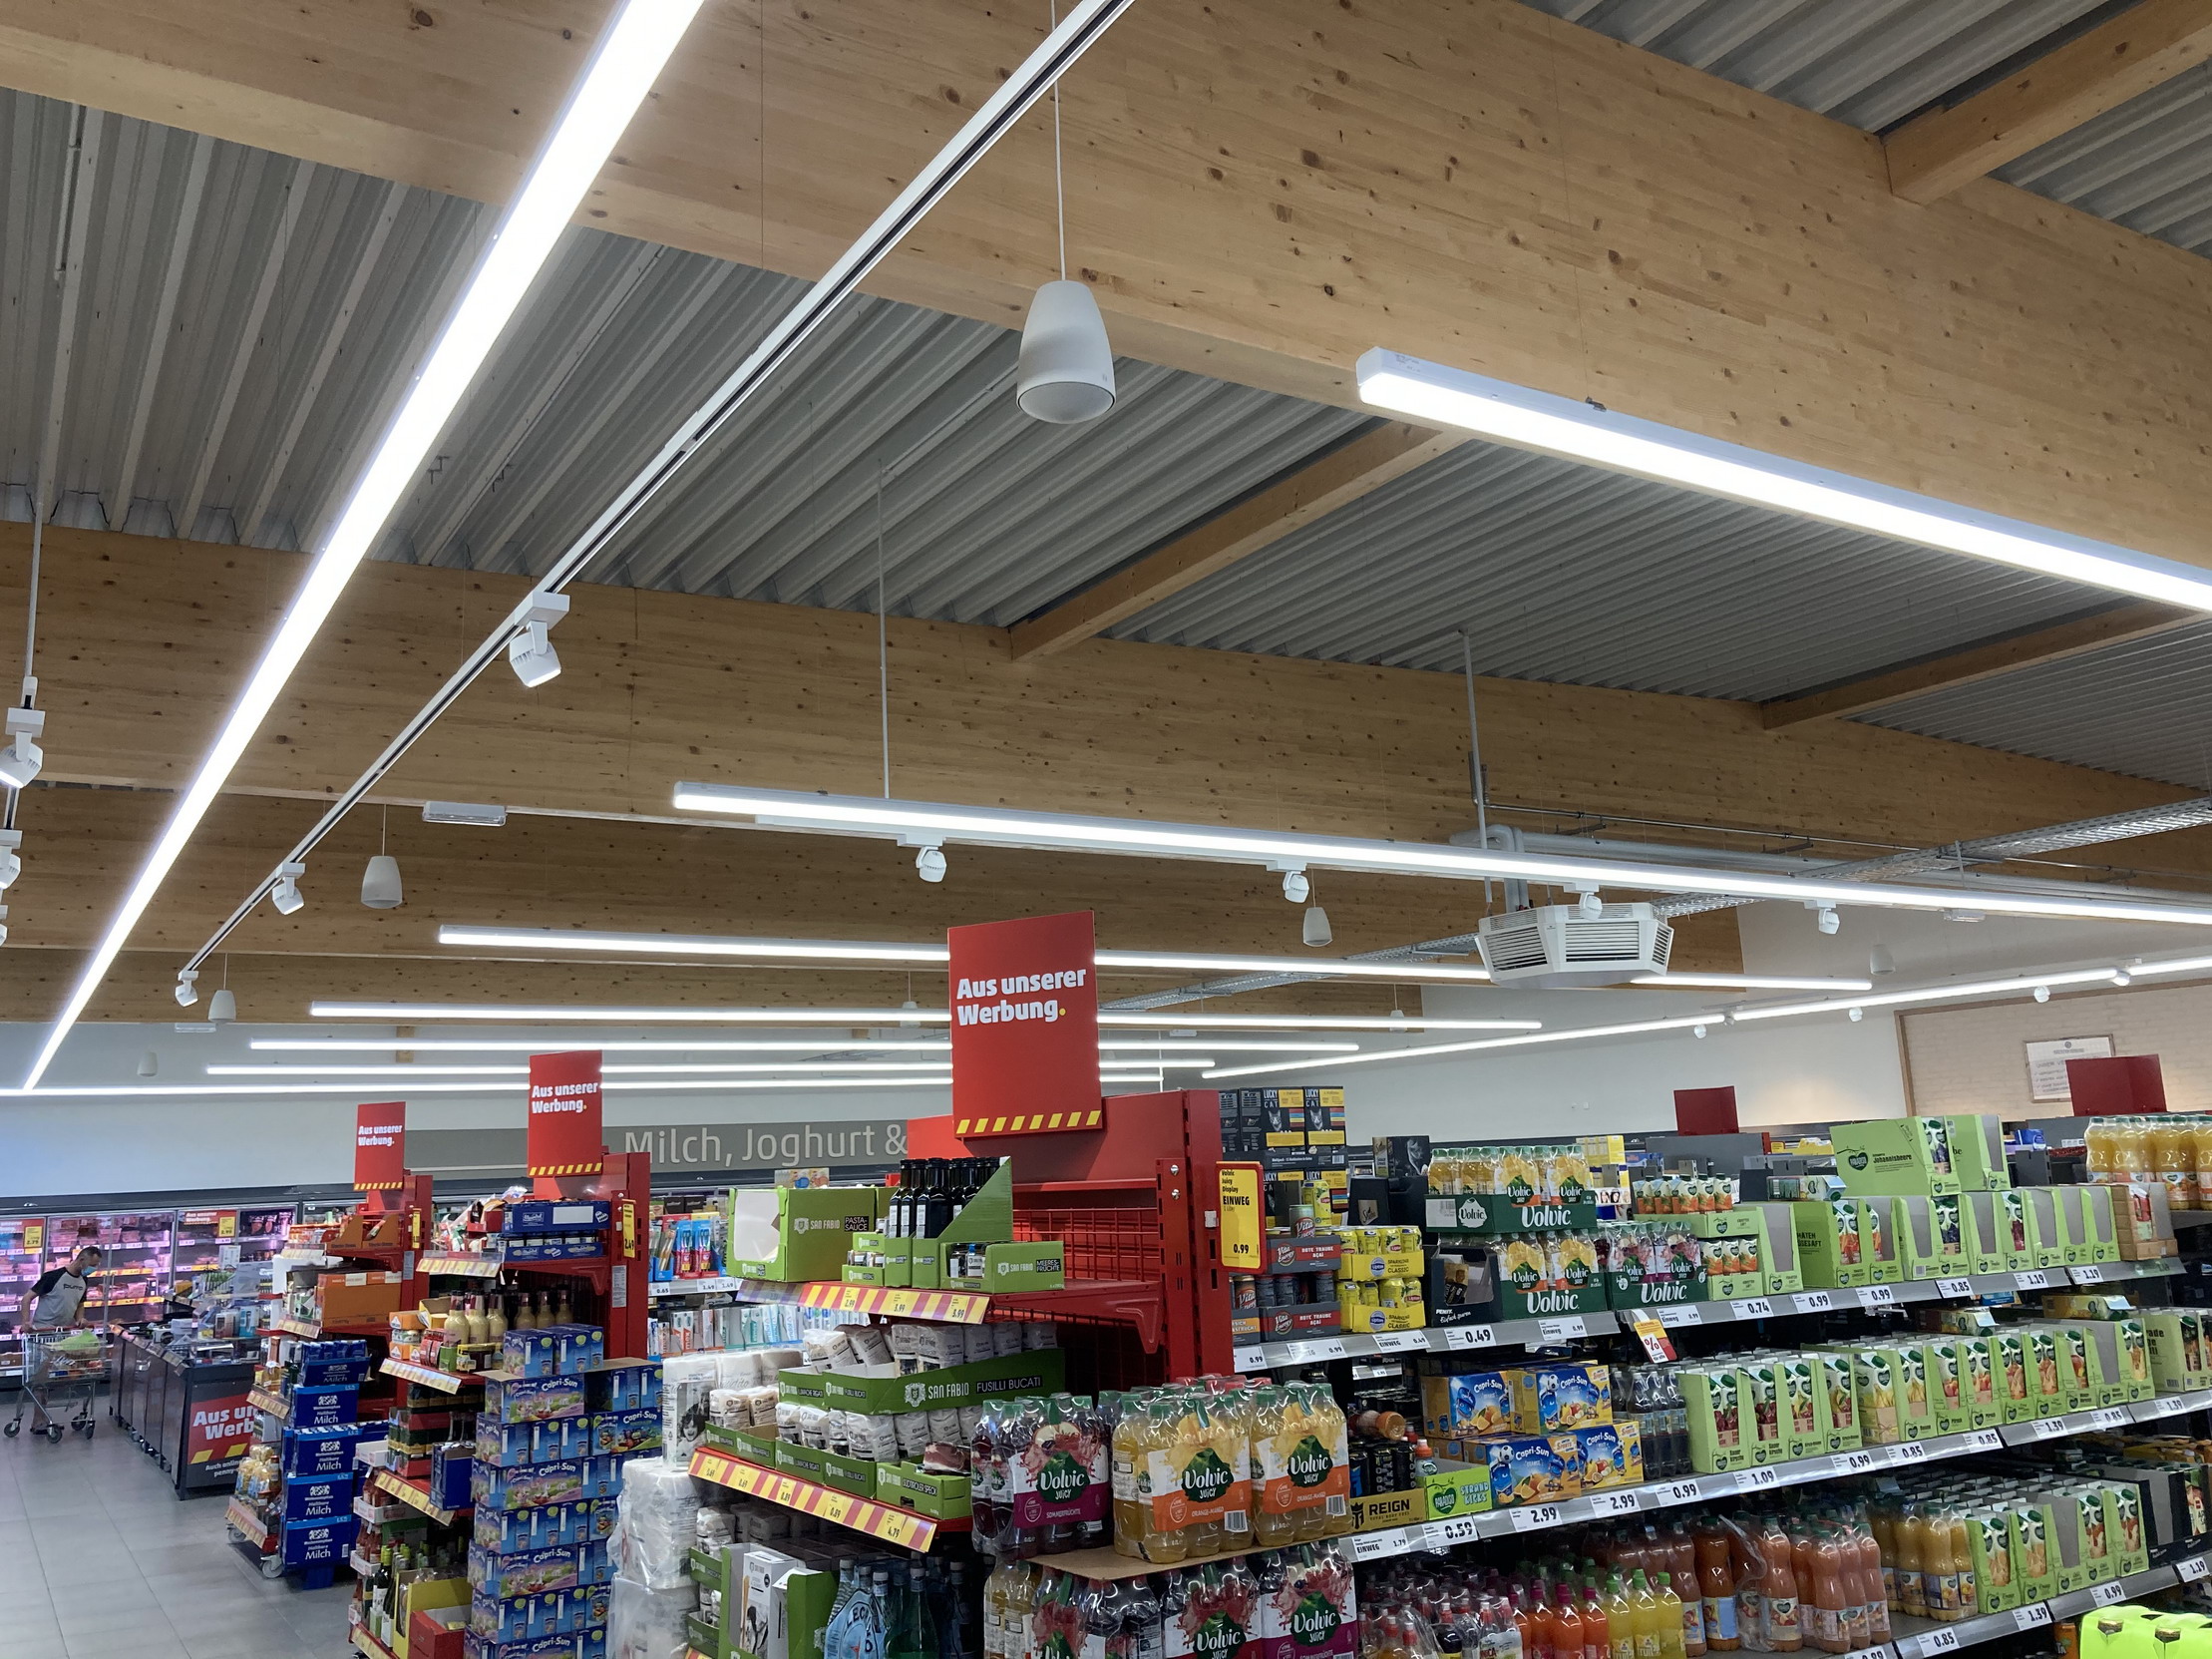 Satteldachbinder Lebensmittelmarkt Verbrauchermarkt Leimholz Dachkonstruktion Holzrahmenbauwand